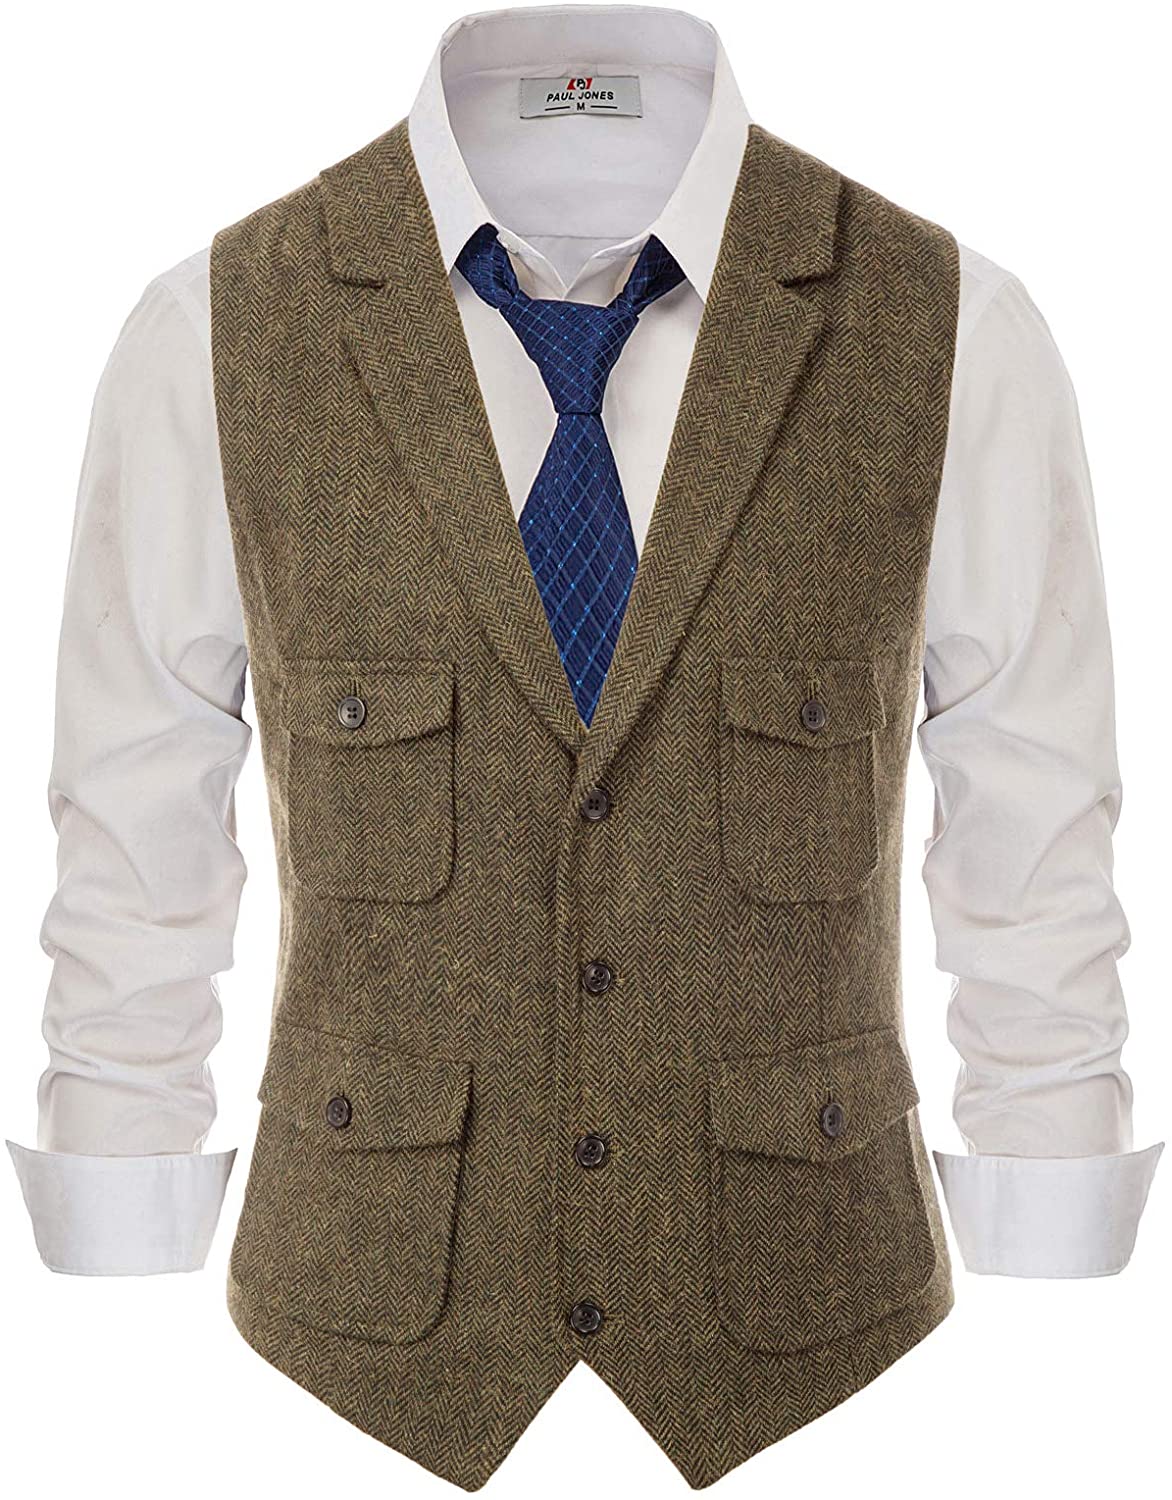 PJ PAUL JONES Men's Herringbone Tailored Collar Waistcoat Wool Tweed ...